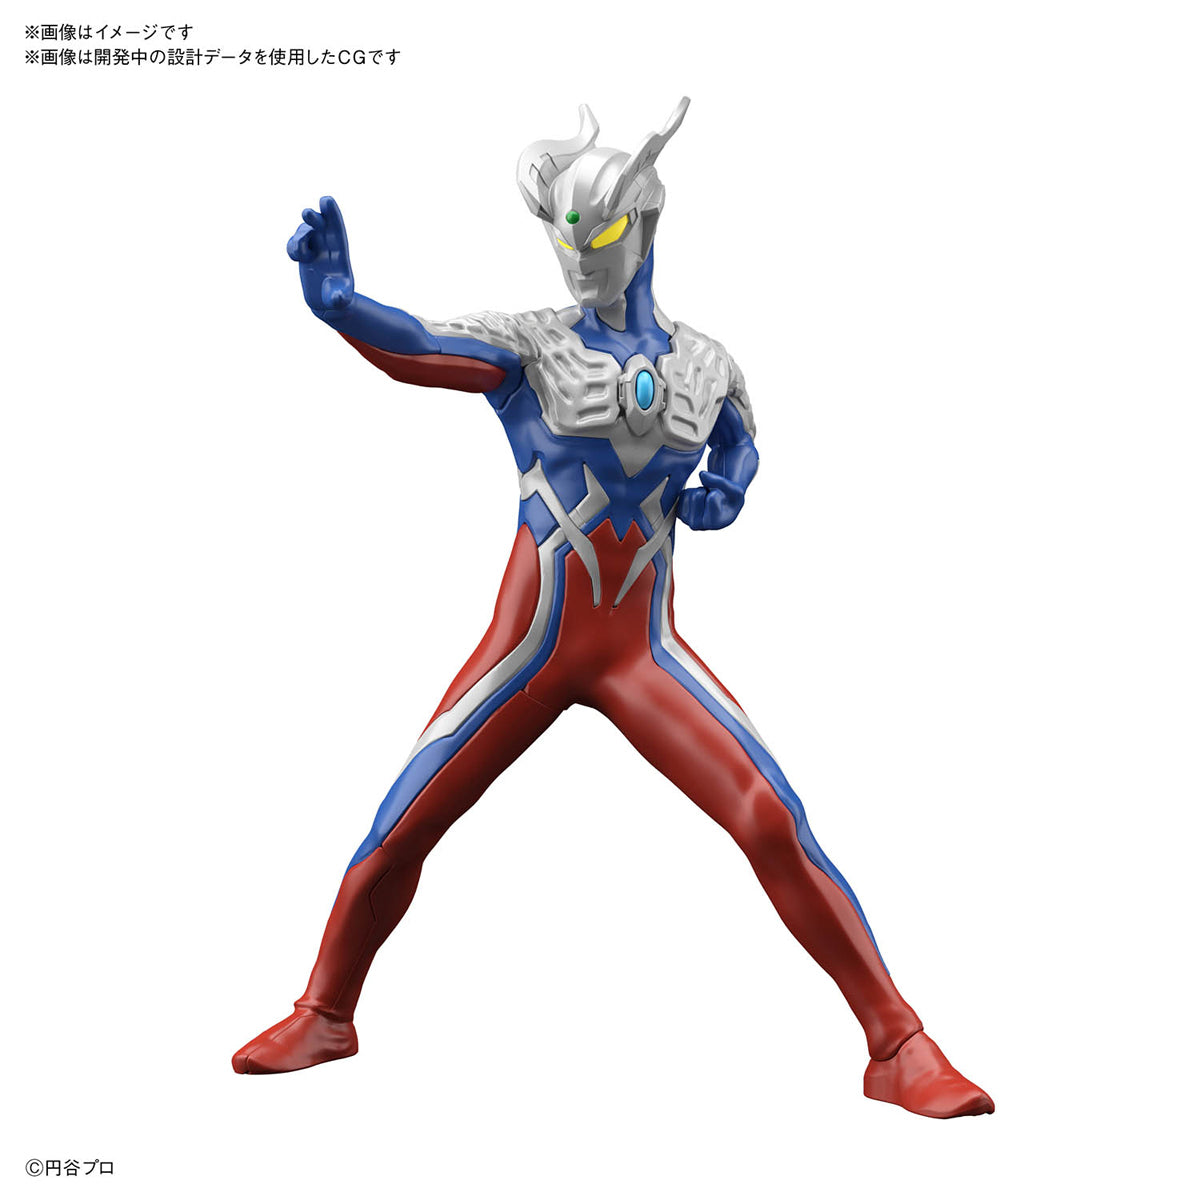 Bandai 5060274 Entry Grade Ultra Man Zero Bandai GUNDAM